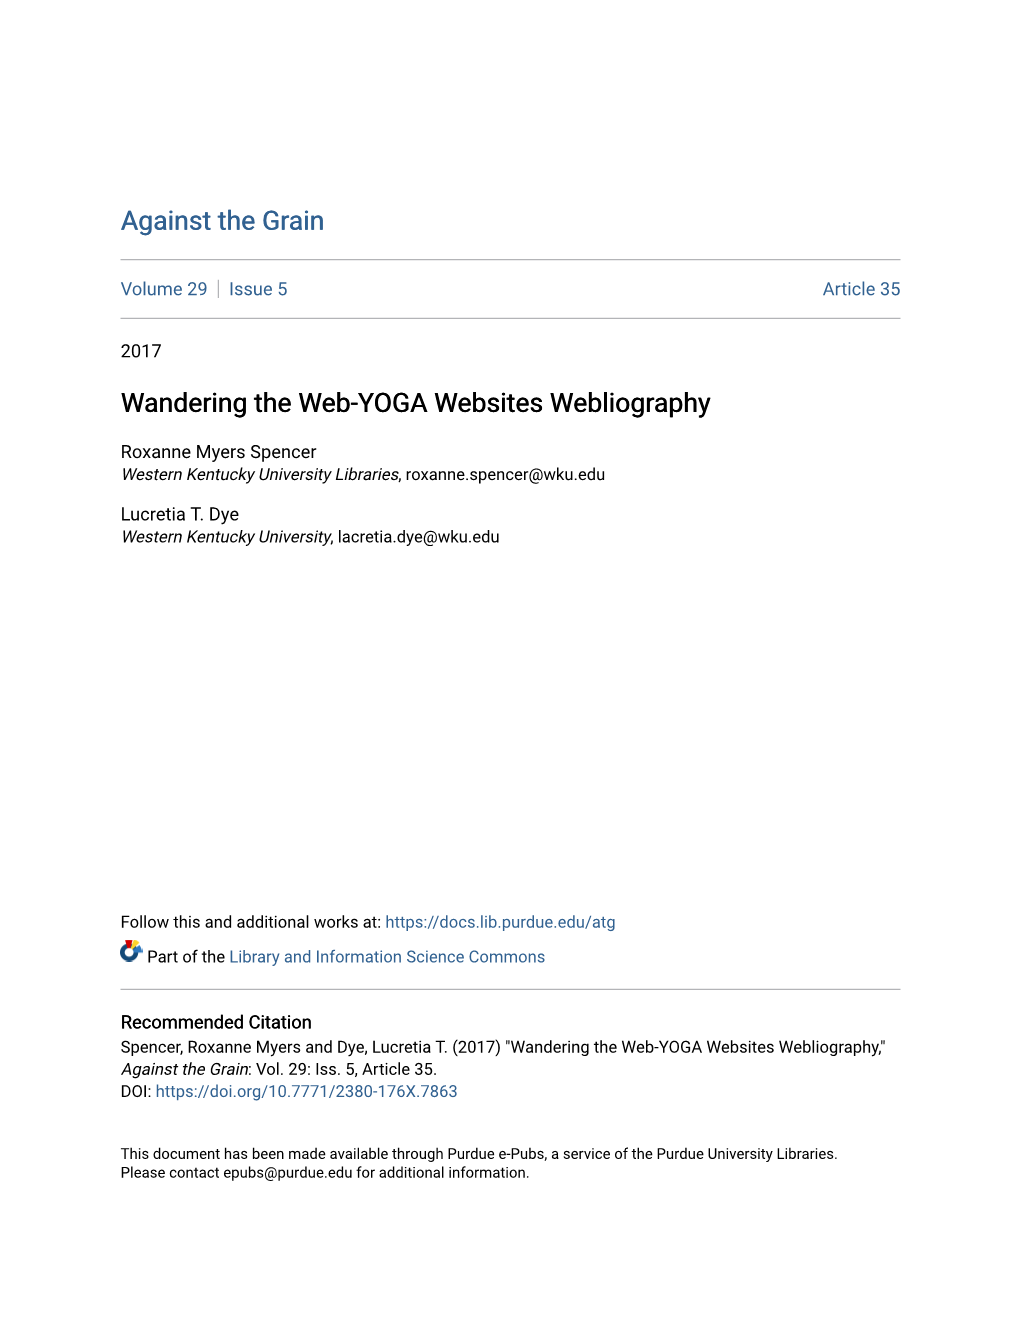 Wandering the Web-YOGA Websites Webliography